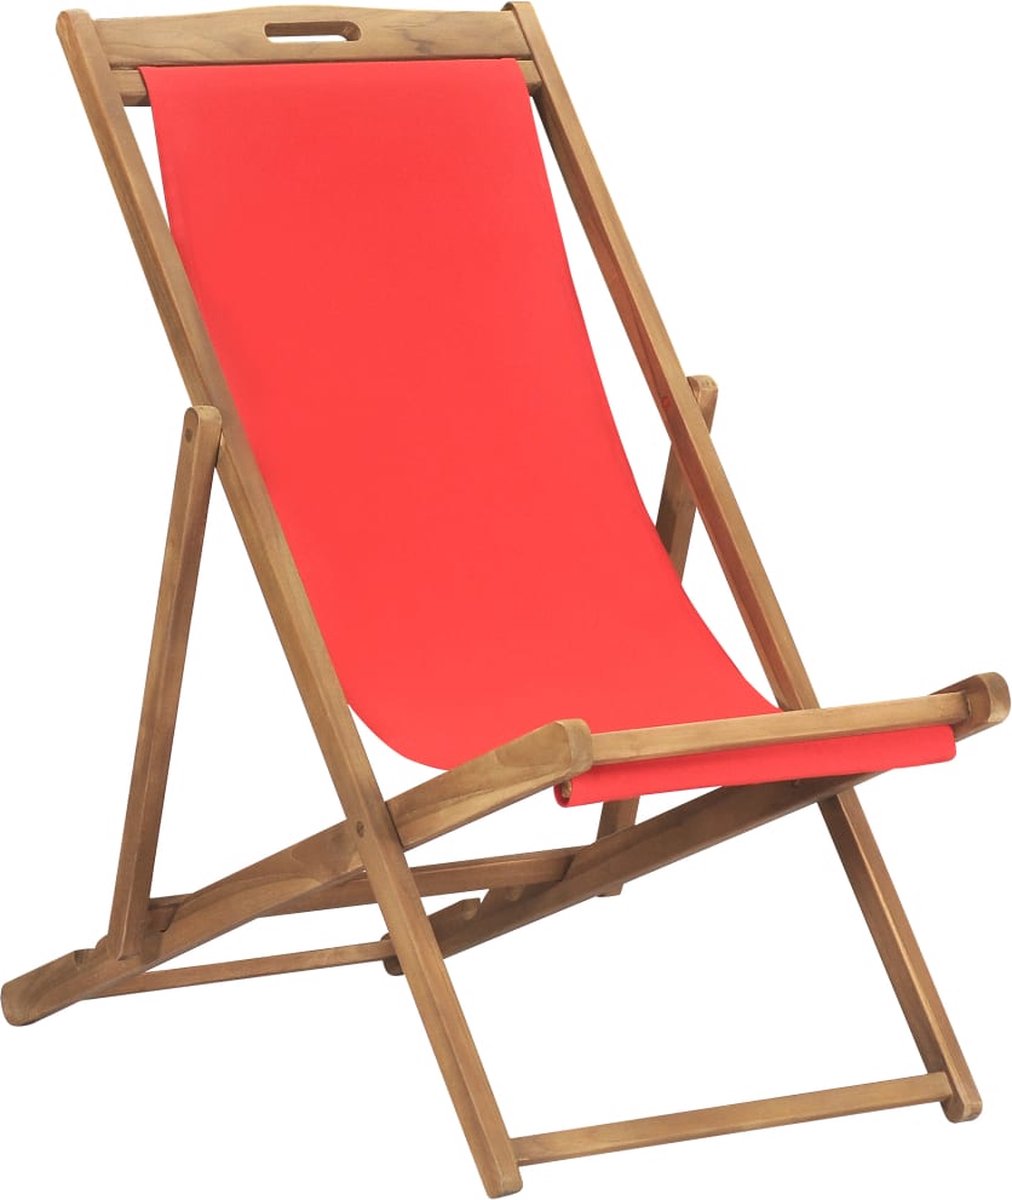 ligstoel - teakhout - rood - bruin - duurzaam - strandstoel - camping - weerbestendig - tuinmeubel - stoffen zitting - massief - comfortabel - inklapbaar - 56 x 105 x 96 cm